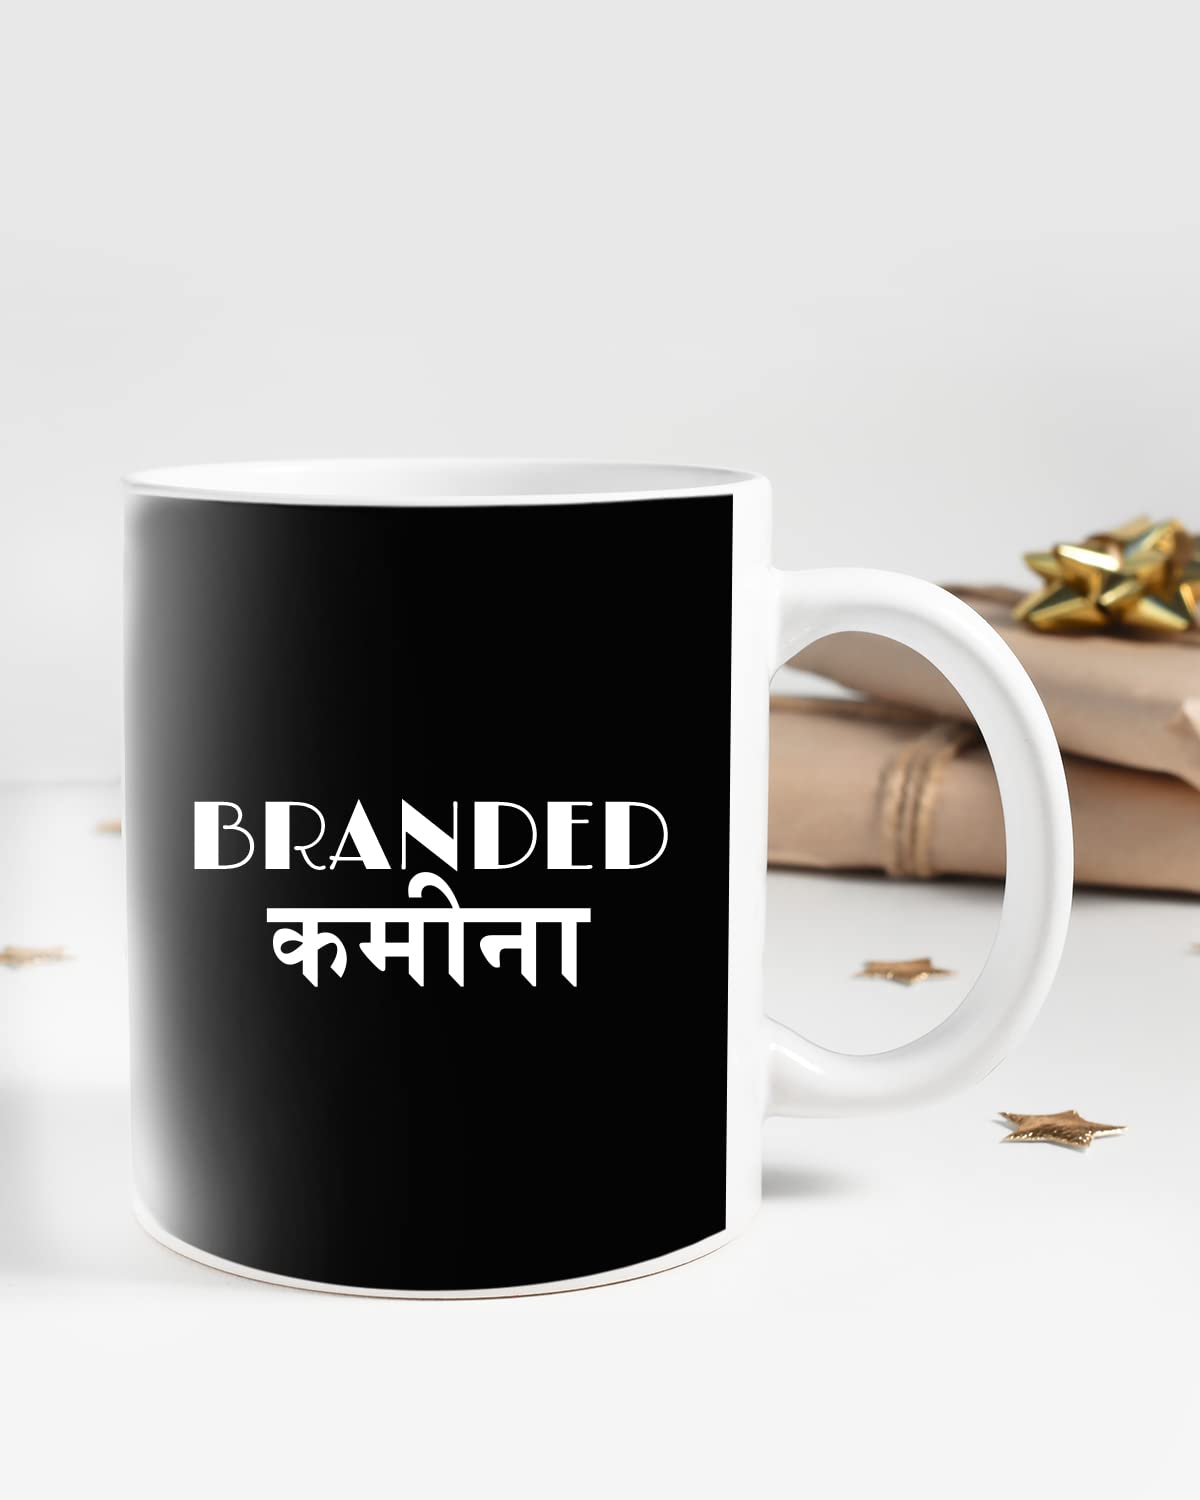 Branded KAMEENA Coffee Mug - Gift for Friend, Birthday Gift, Birthday Mug, Sarcasm Quotes Mug, Mugs with Funny & Funky Dialogues, Bollywood Mugs, Funny Mugs for Him & Her